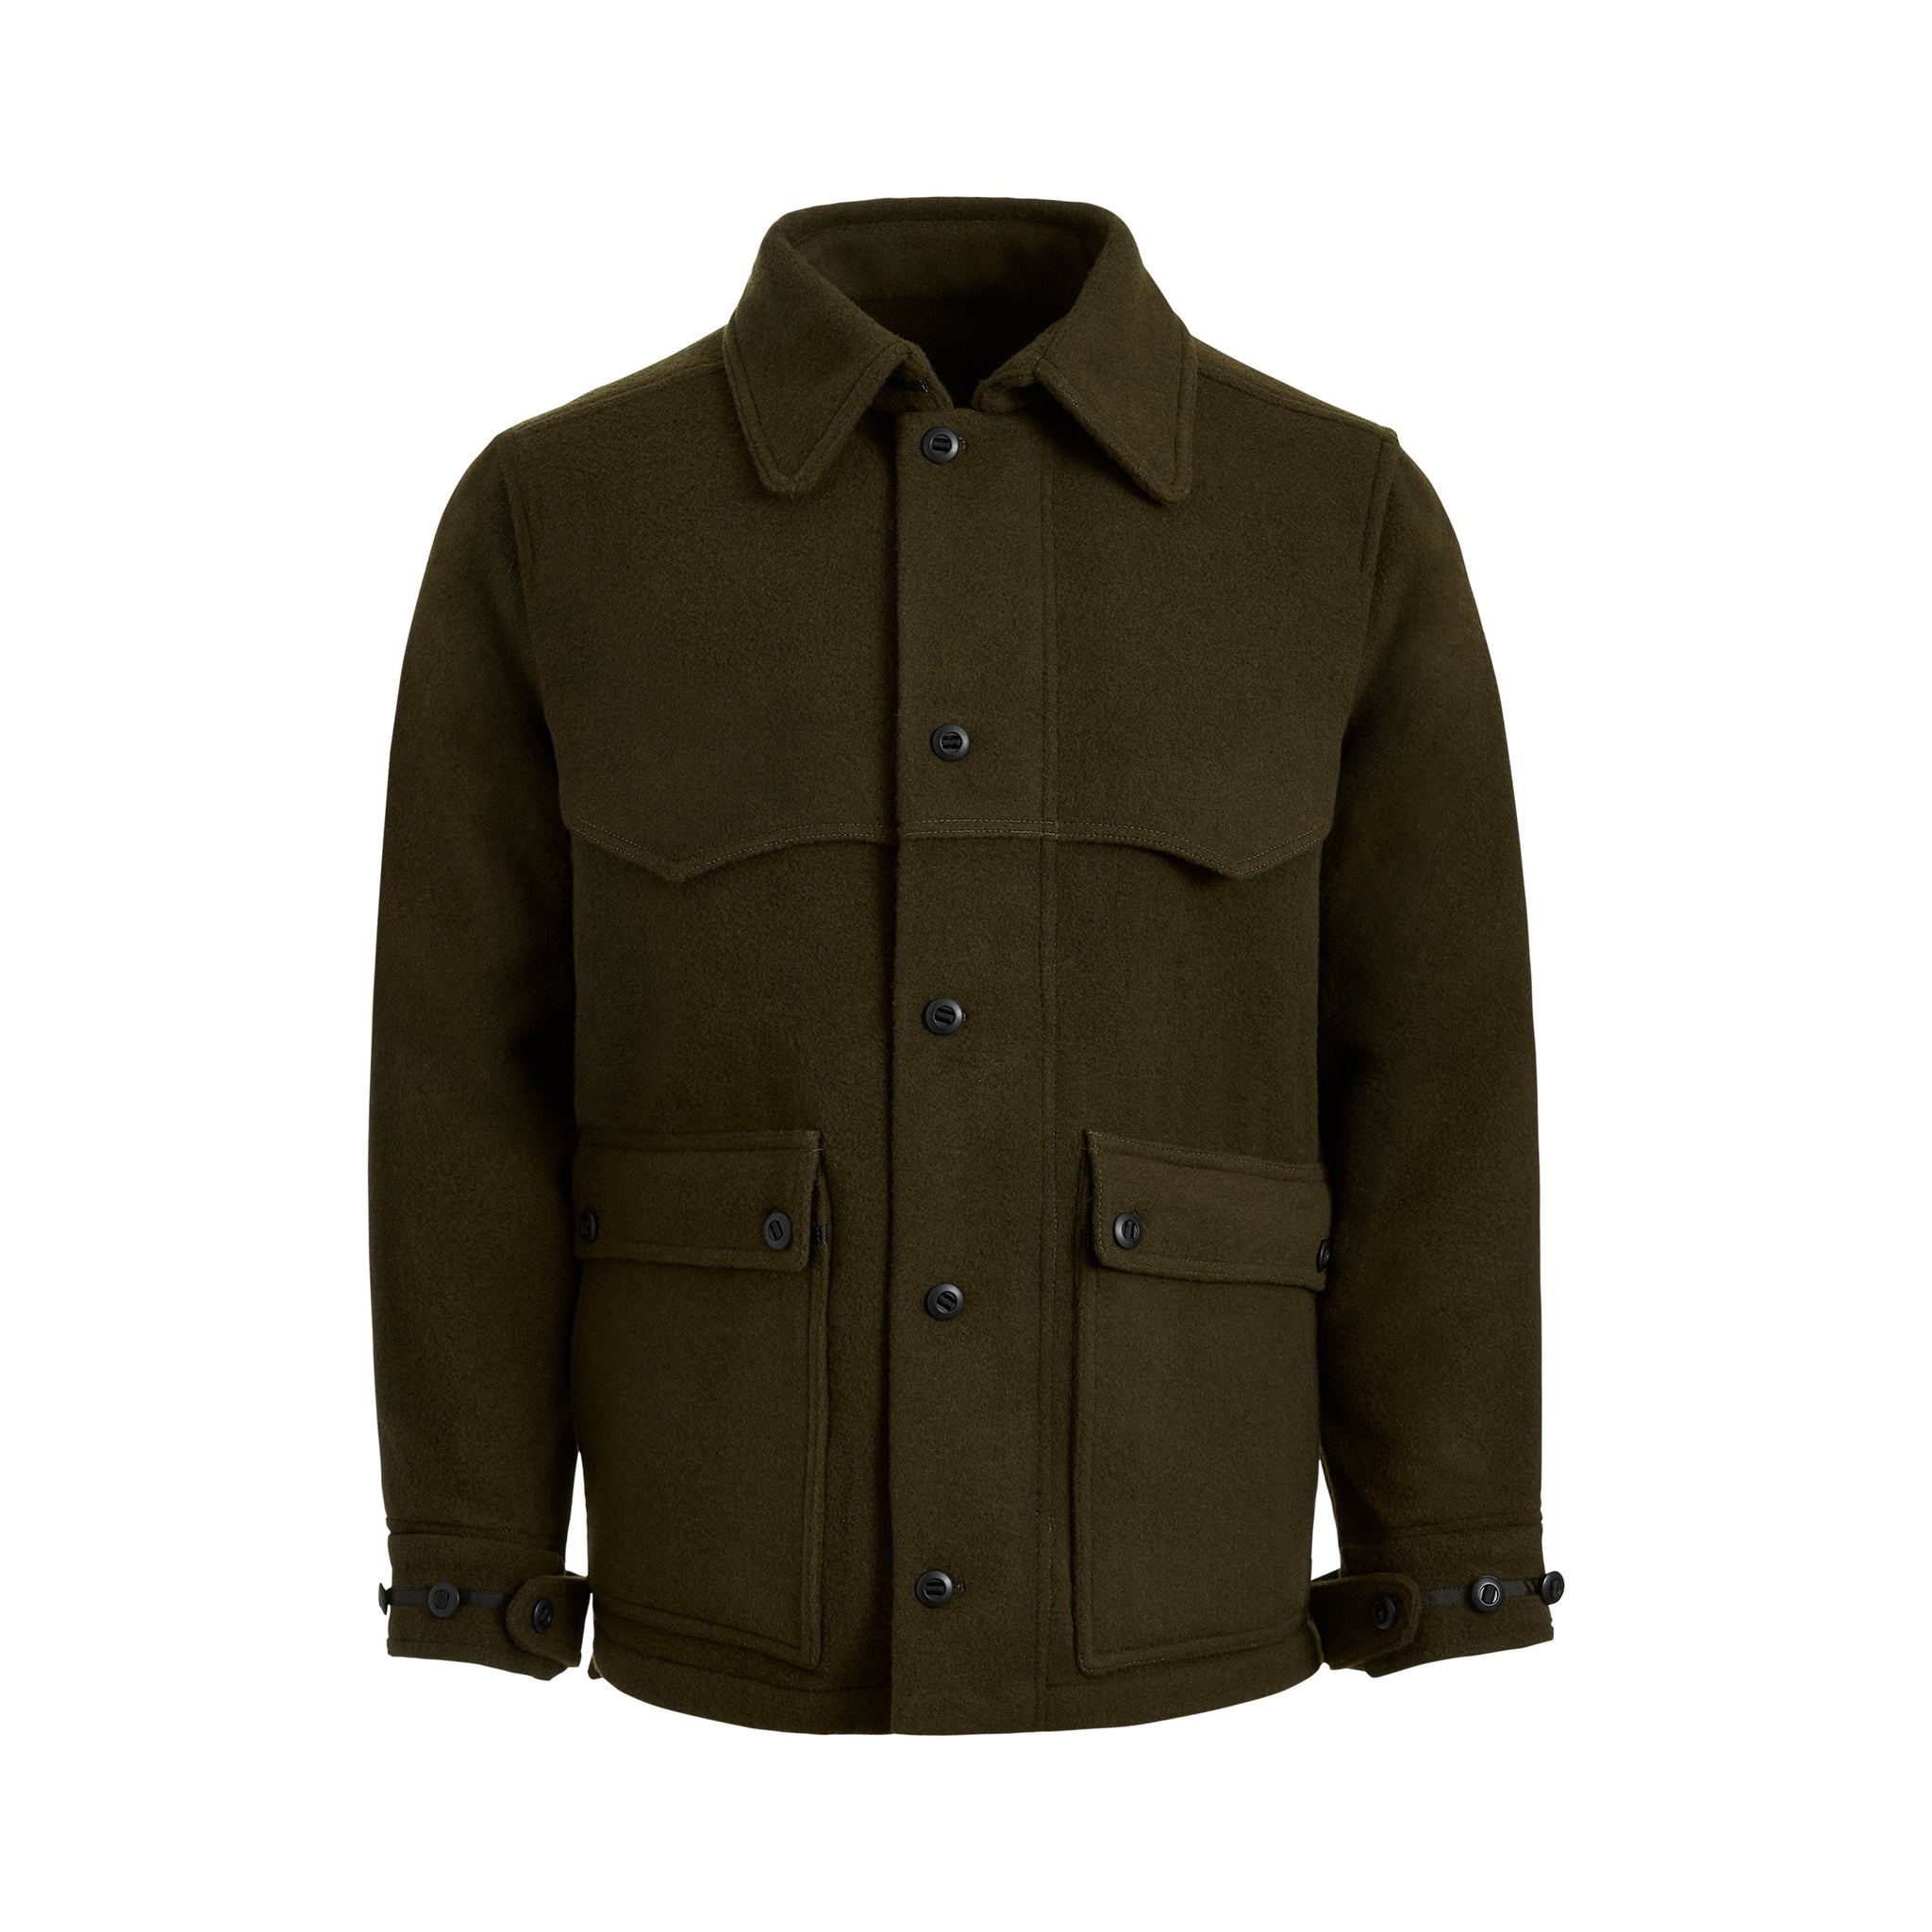 Men's Classic Leather Jacket - Stormtech USA Retail